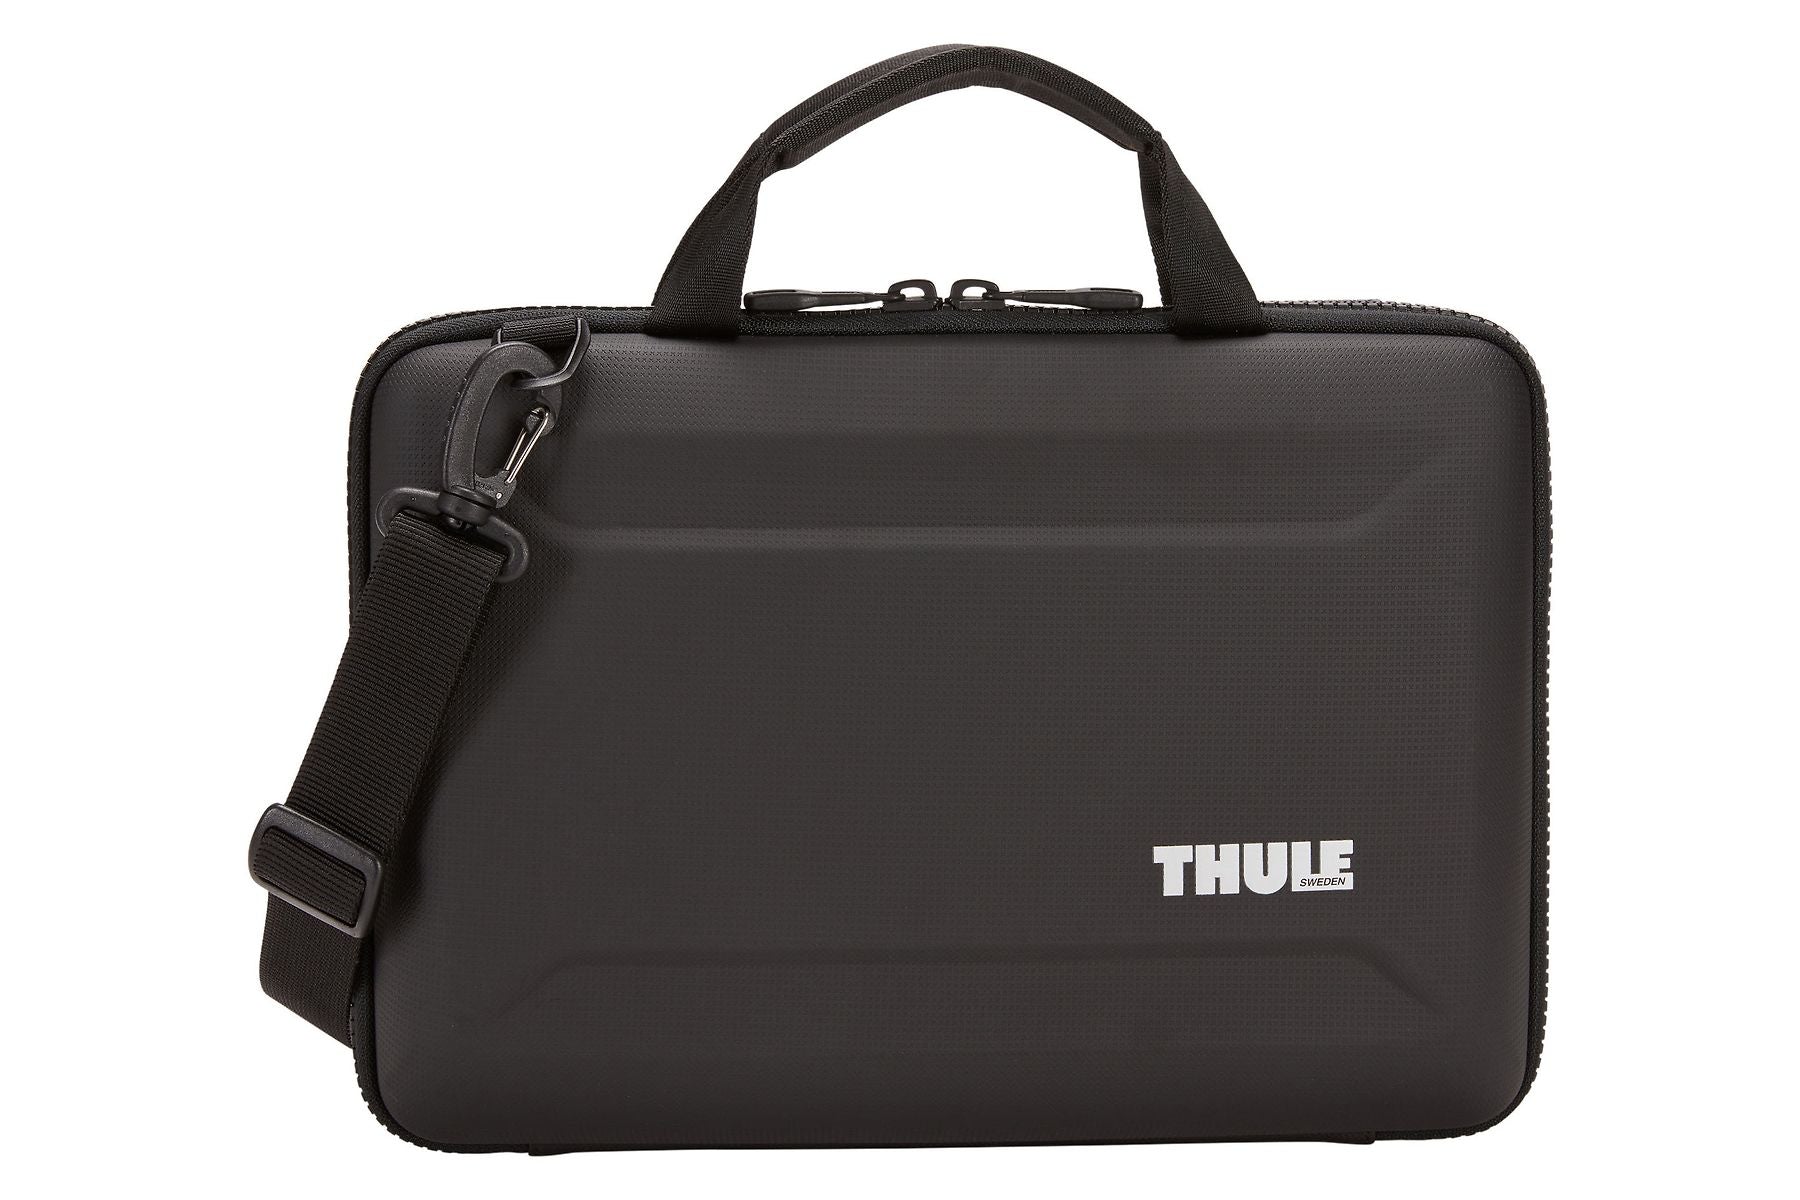 Thule Gauntlet 4 Attaché Sleeve/Bag - Black